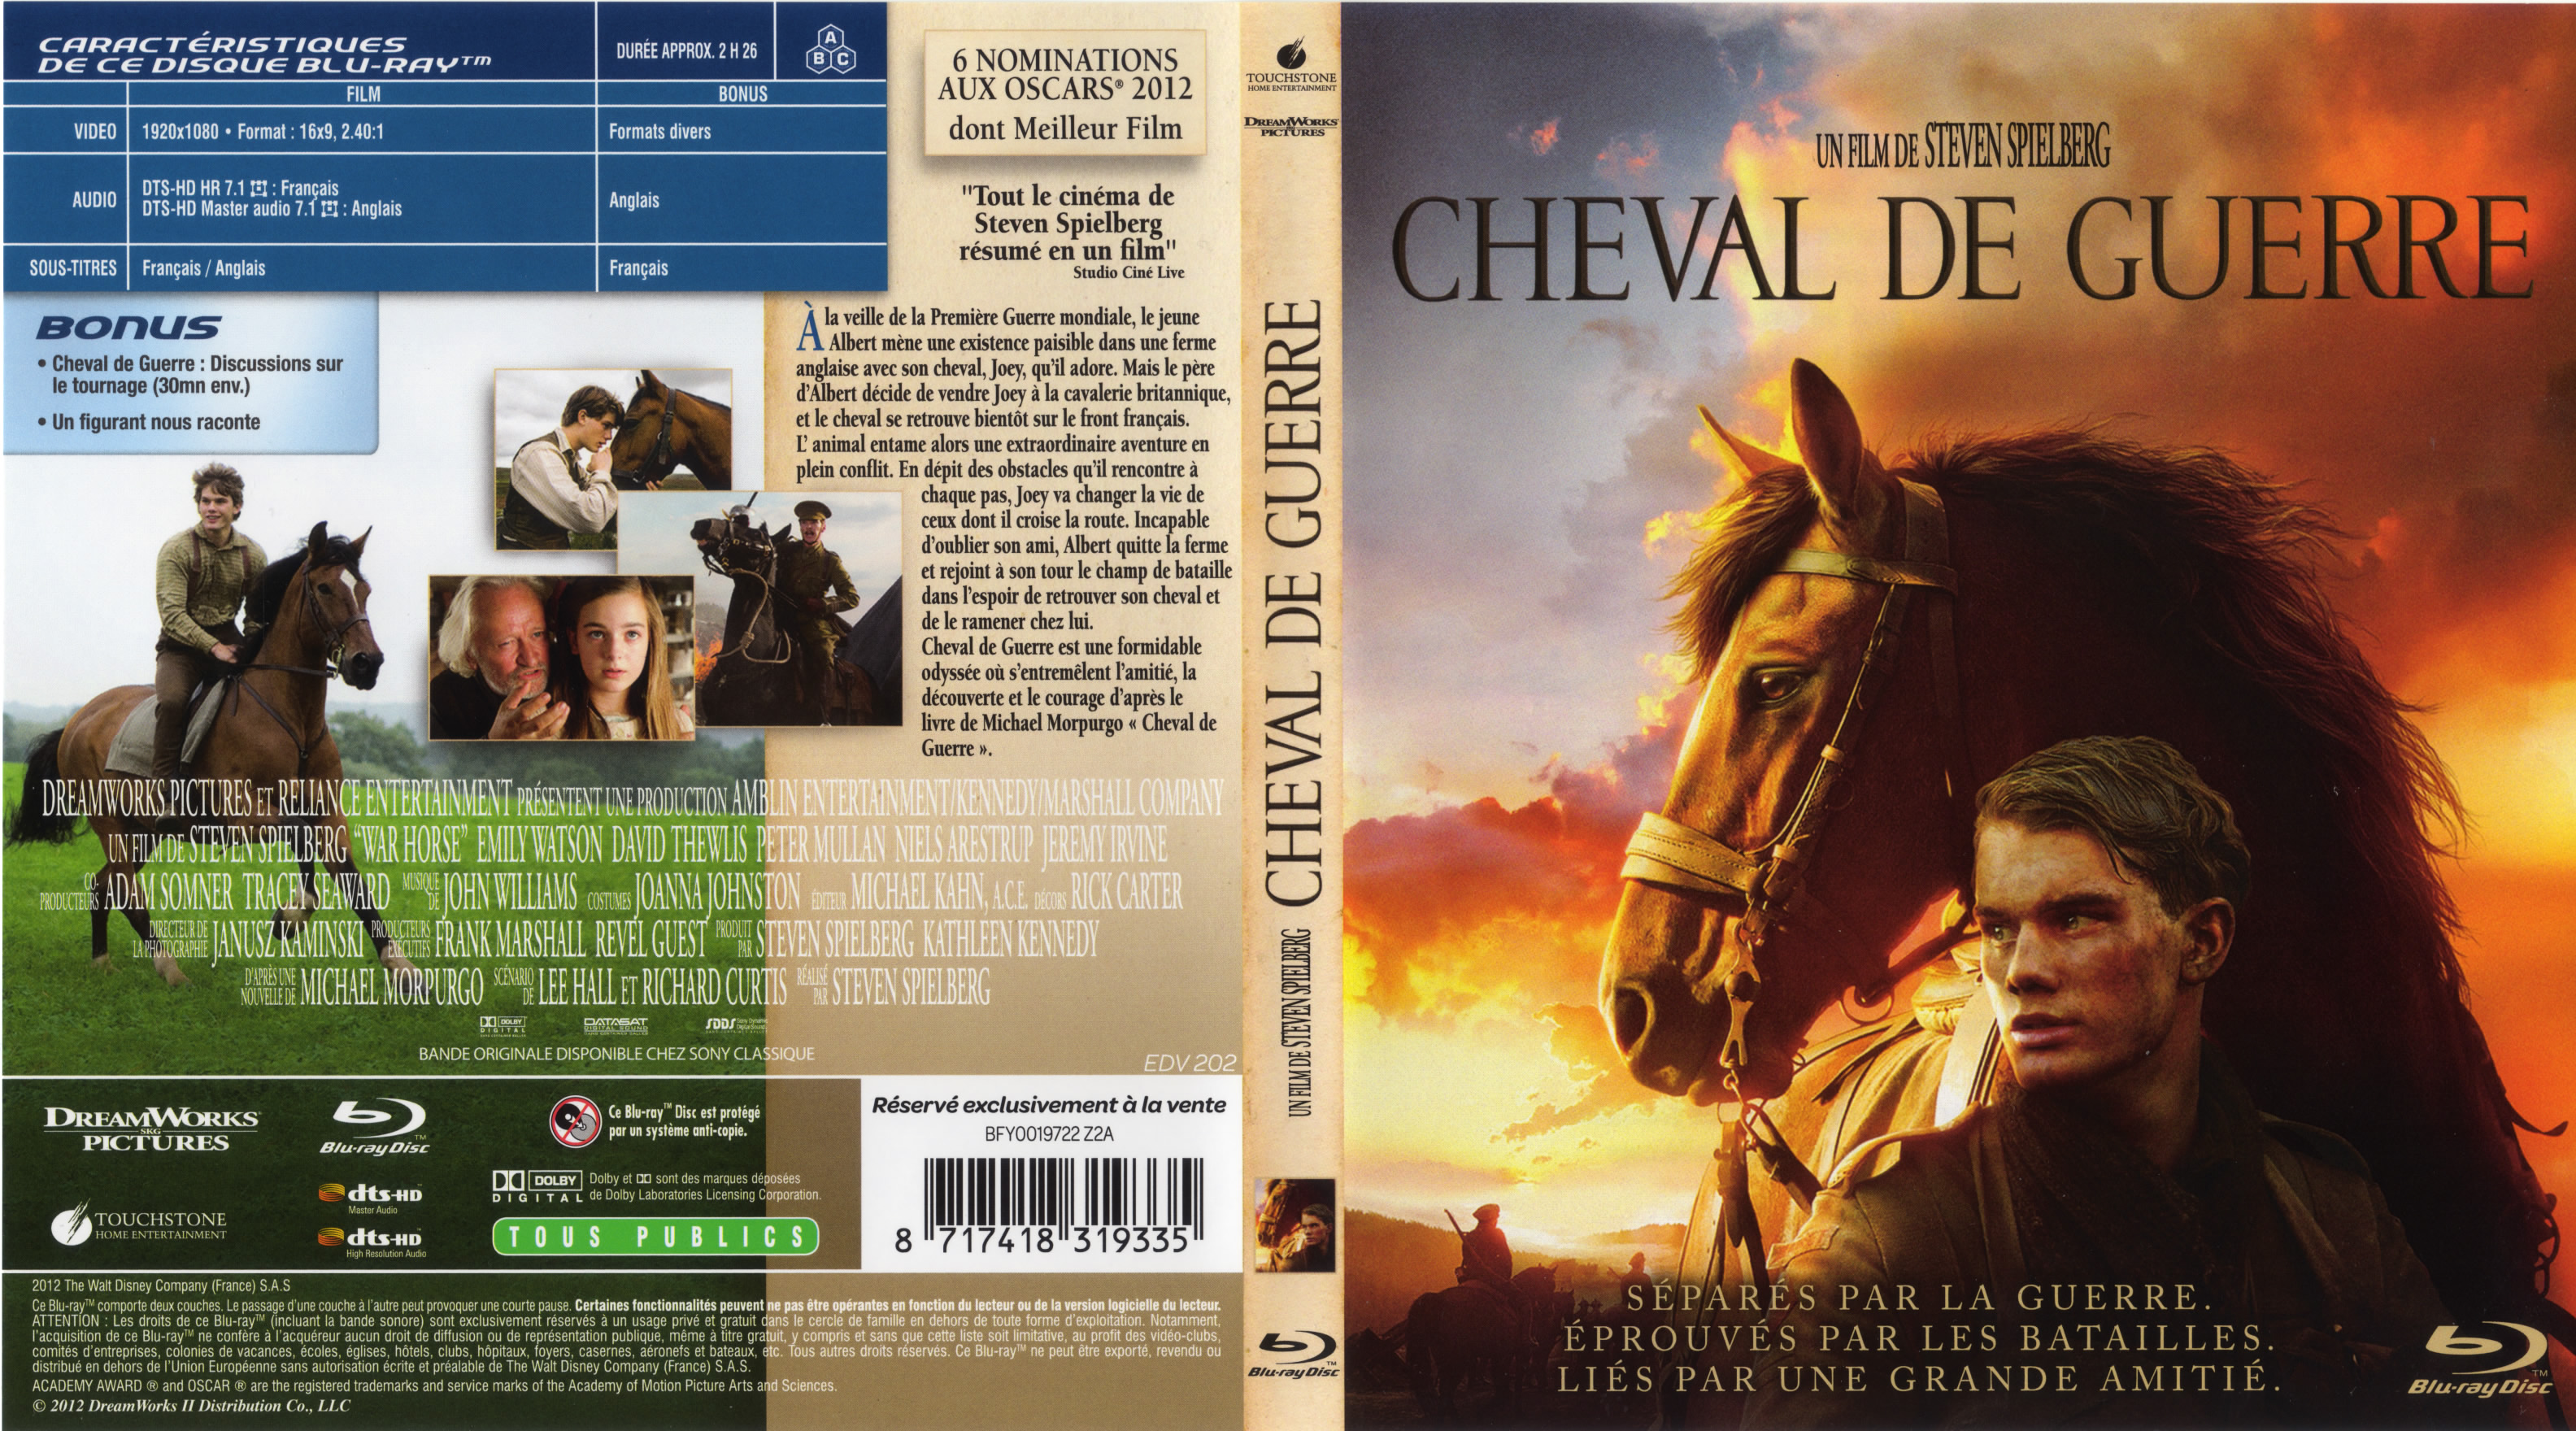 Jaquette DVD Cheval de Guerre (BLU-RAY)